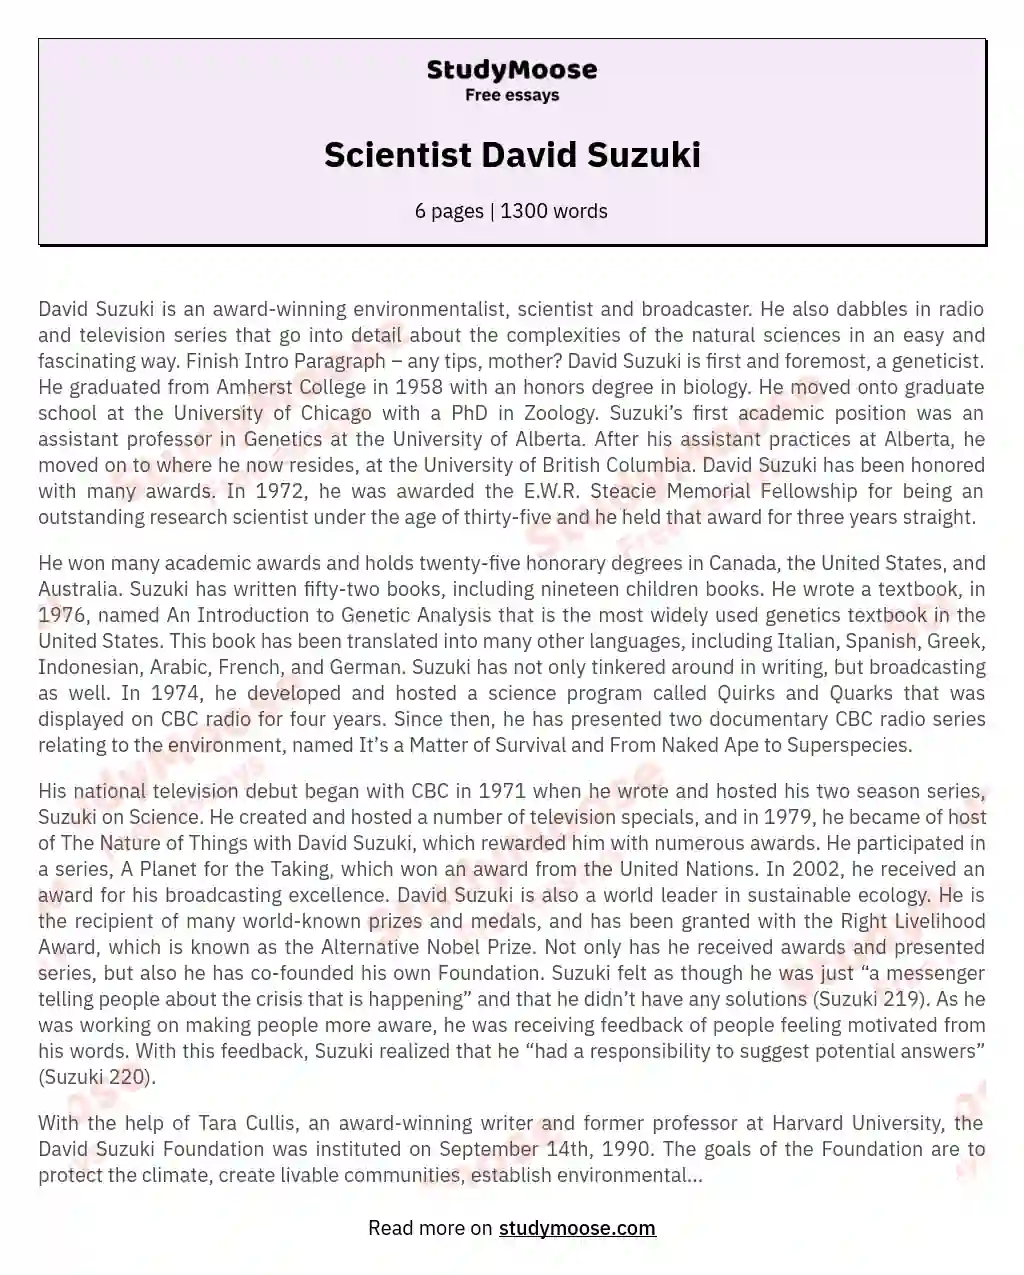 David Suzuki: A Pioneer in Environmental Advocacy essay